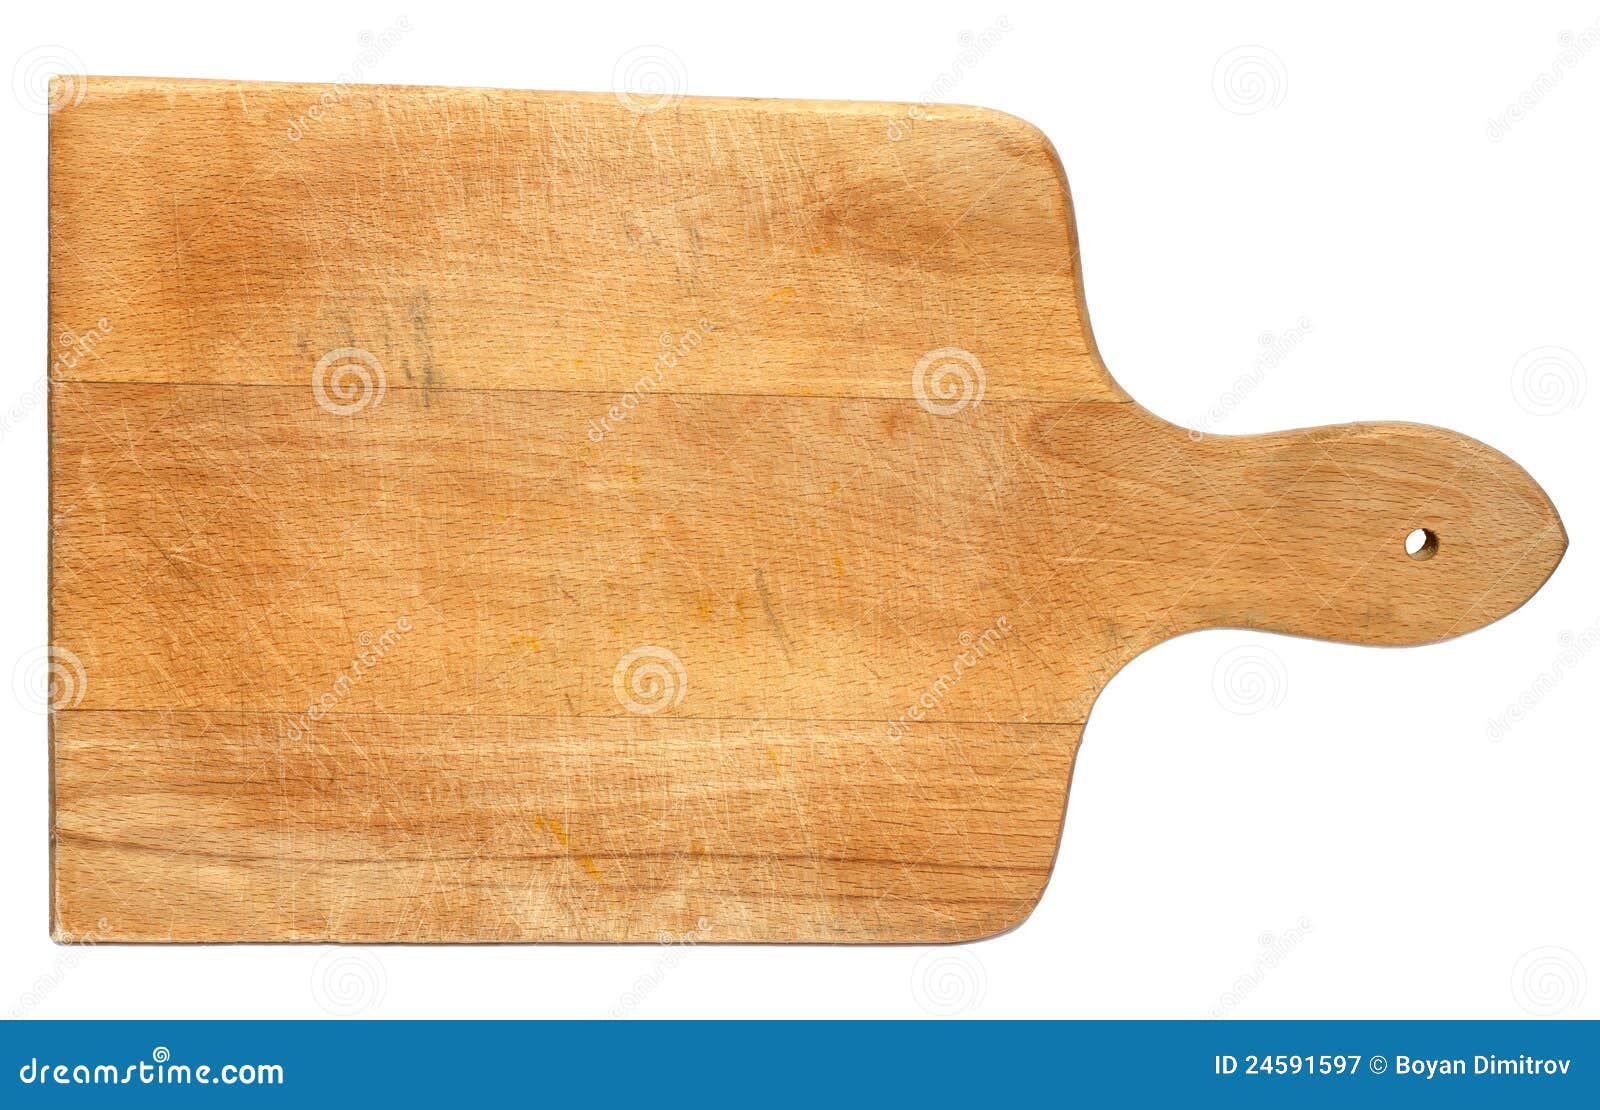 used chopping board